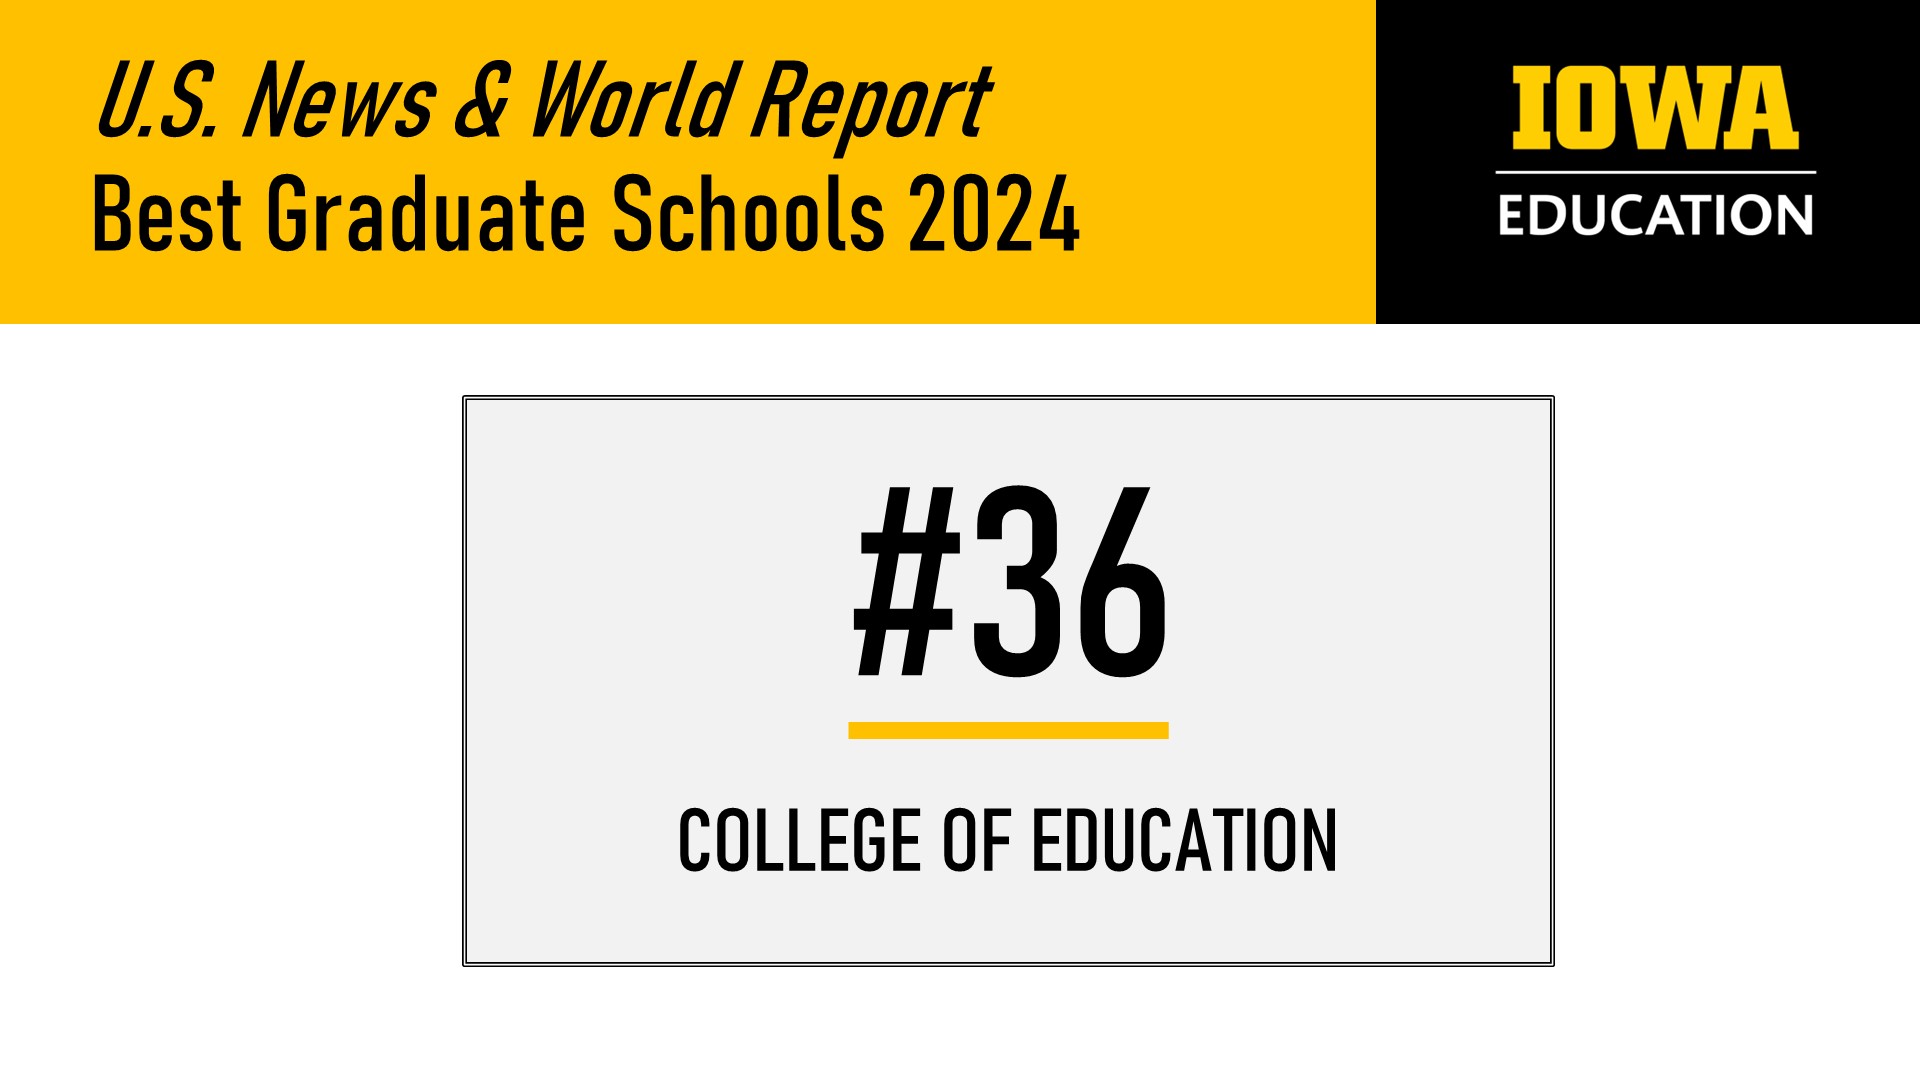 U.S. News & World Report Best Graduate Schools 2024. #36 College of Education